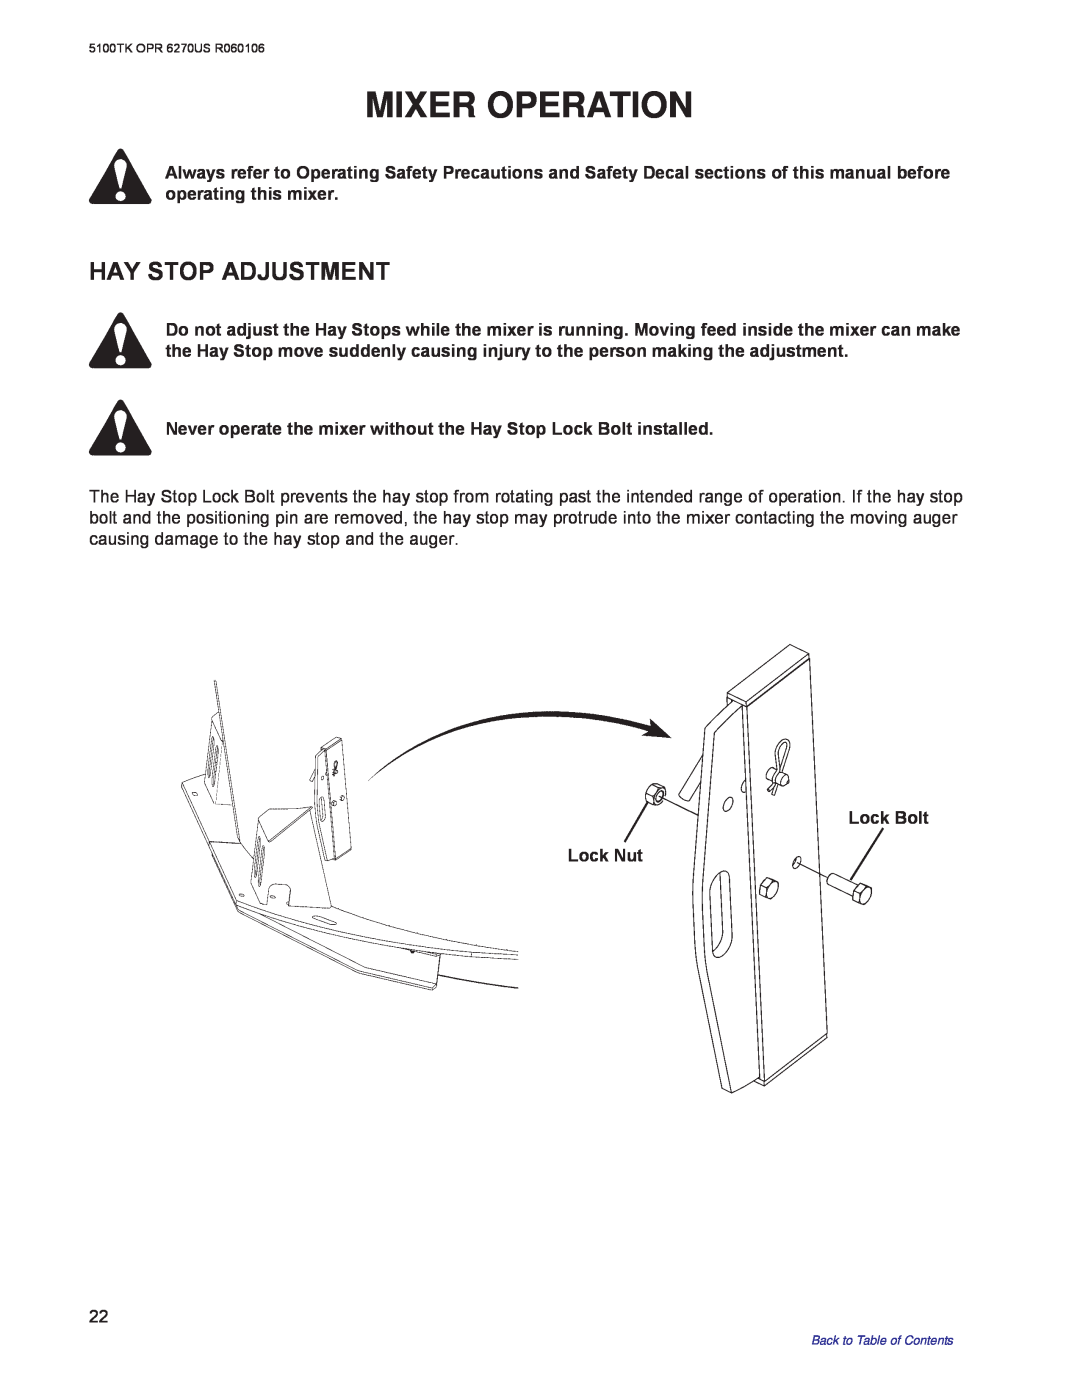 Kuhn Rikon 5100 instruction manual Hay Stop Adjustment, Mixer Operation 